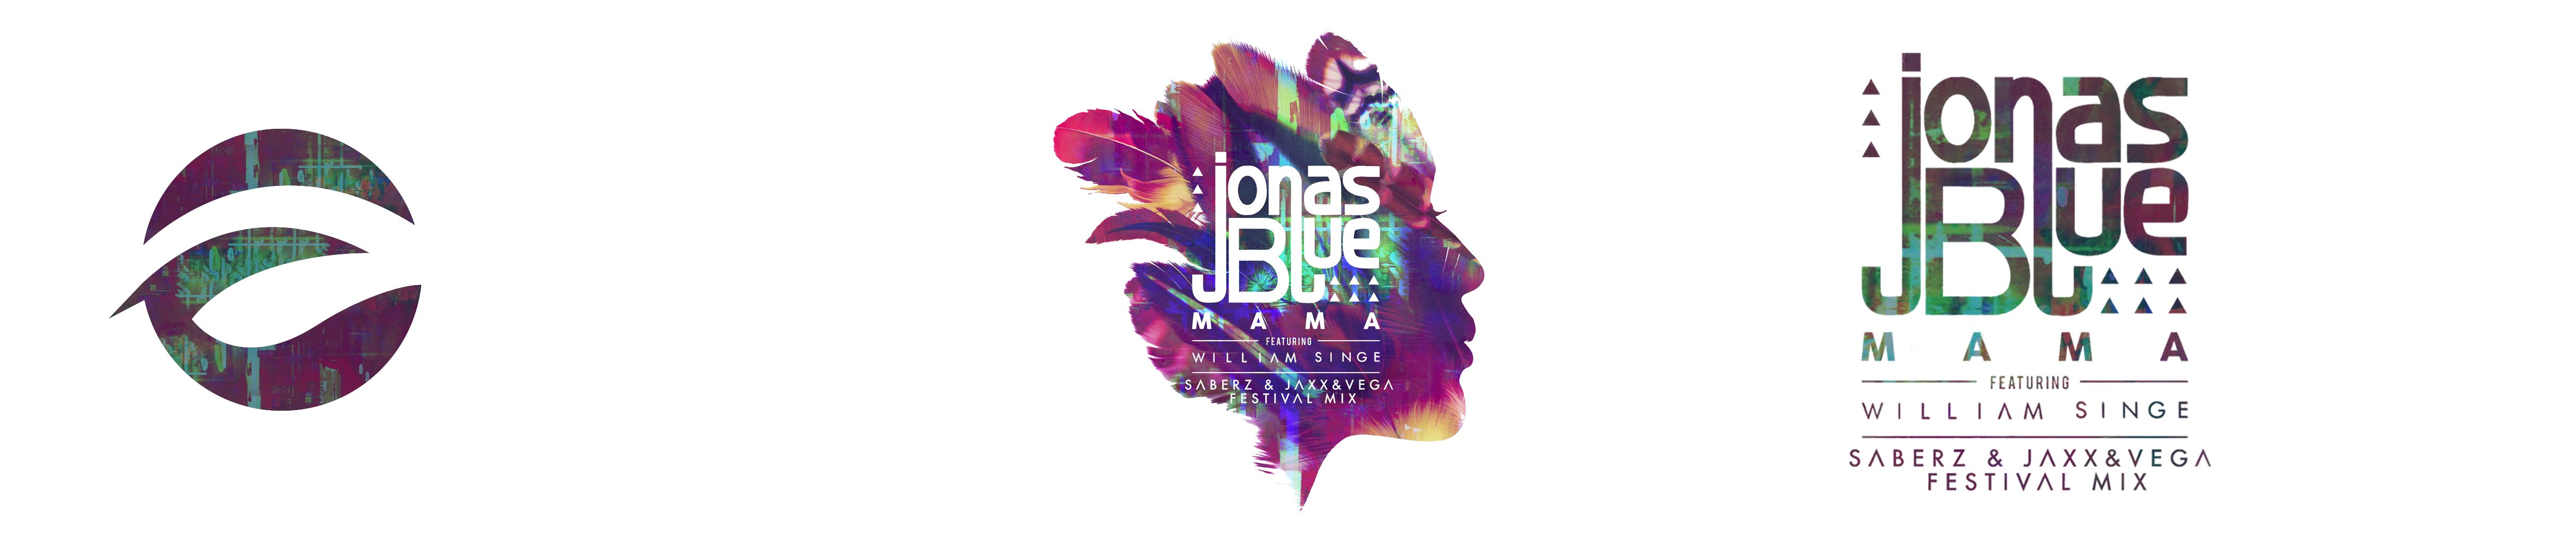 Stream Jonas Blue - Mama (Jaxx & Vega & SaberZ Festival Mix) [TNC 